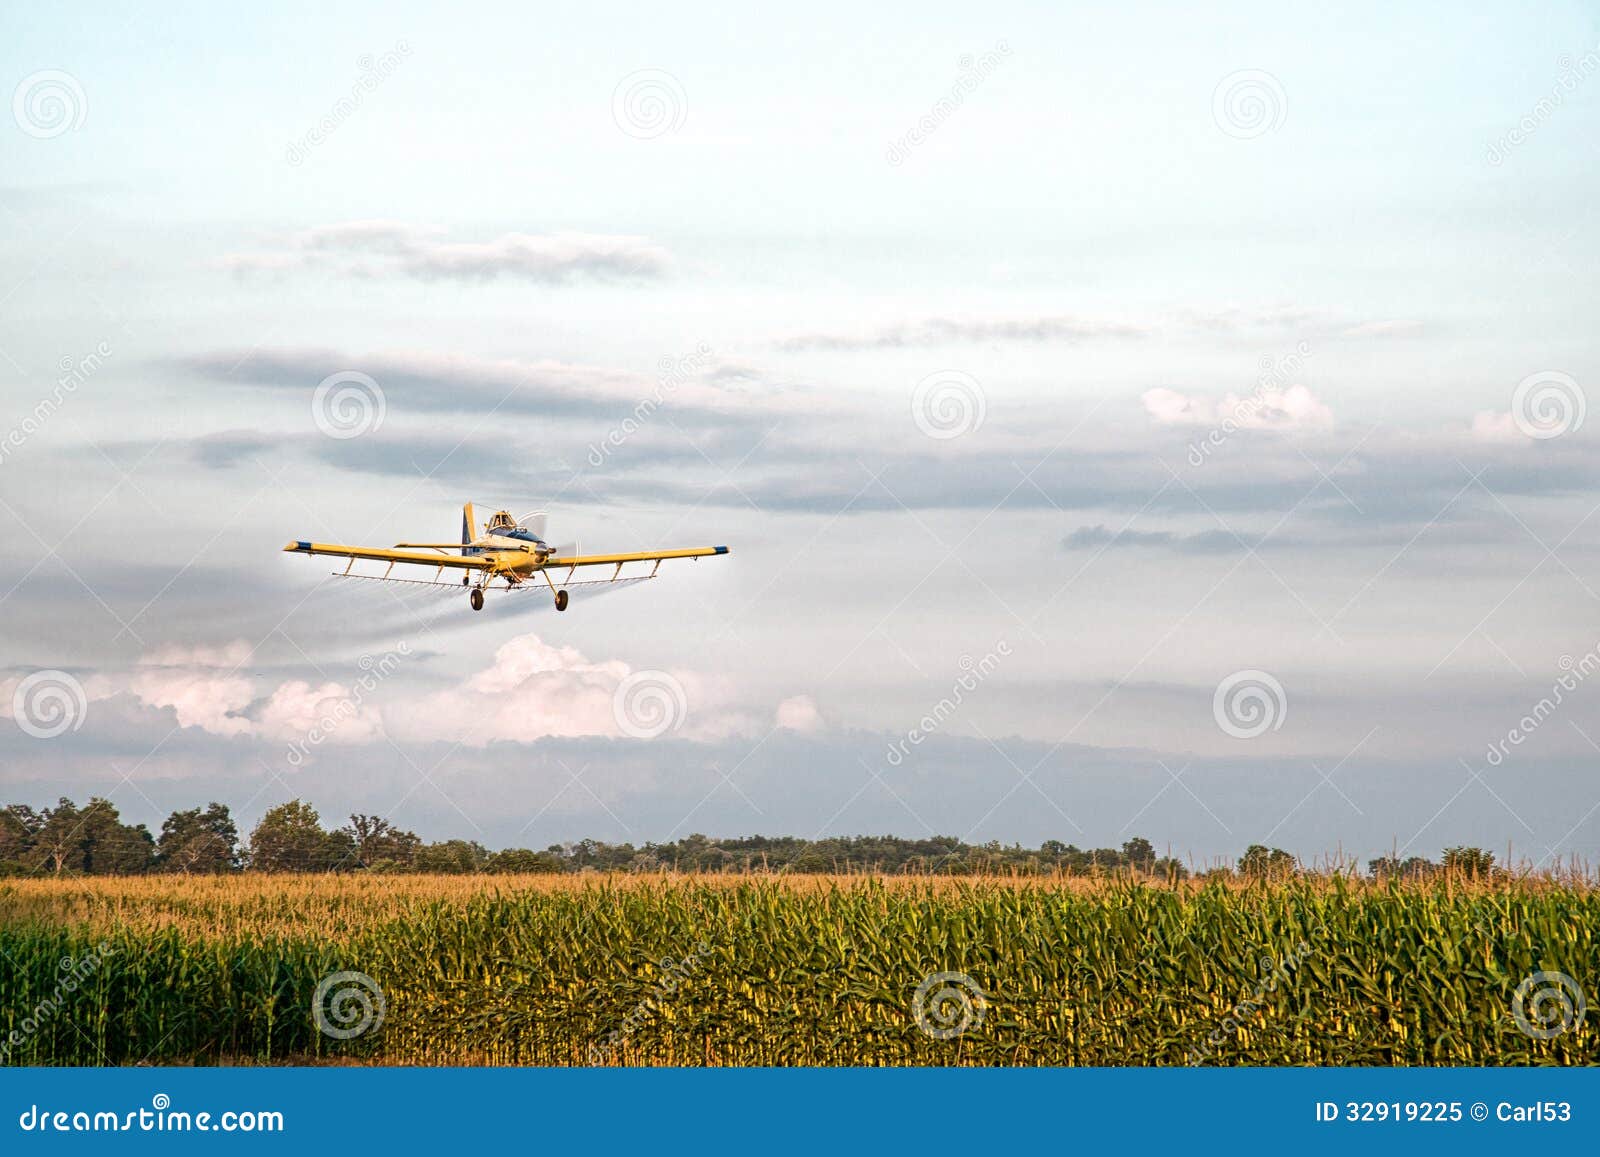 crop duster spraying corn field